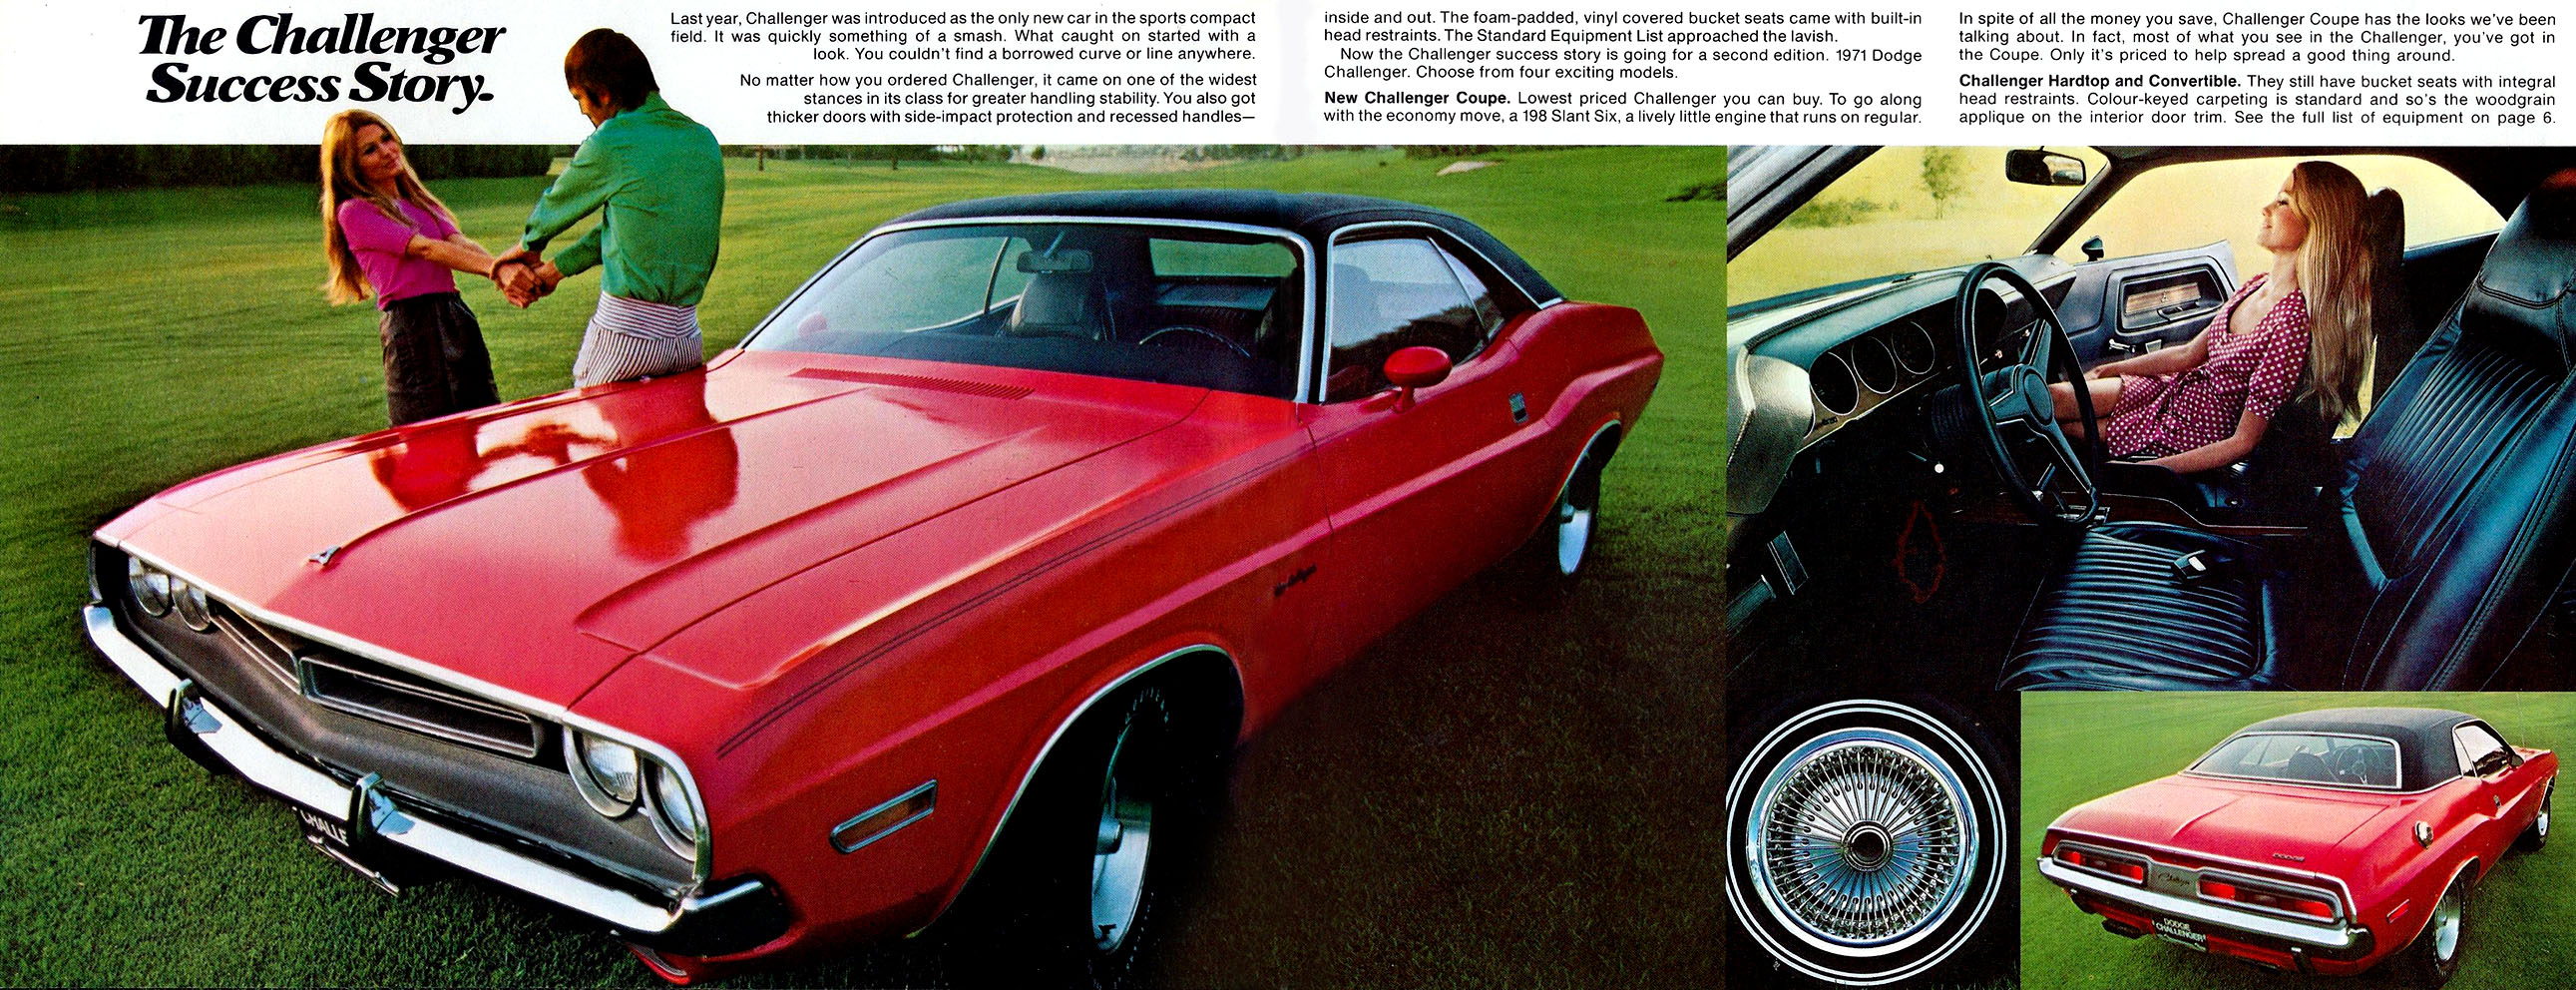 1971_Dodge_Challenger_Cdn-02-03